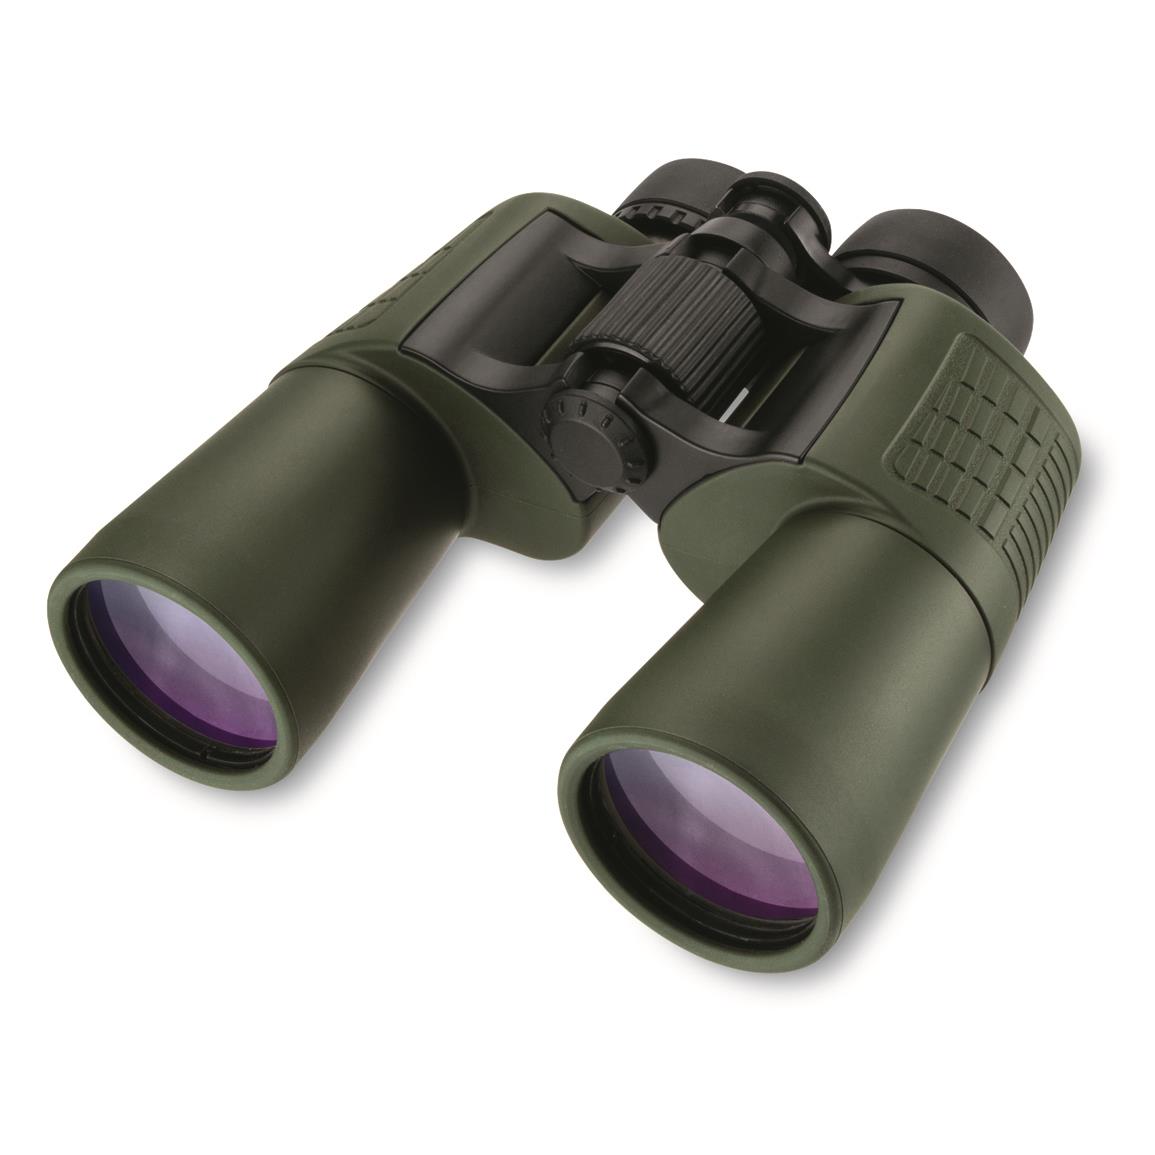 Barska 10x50mm X-Treme View Binoculars